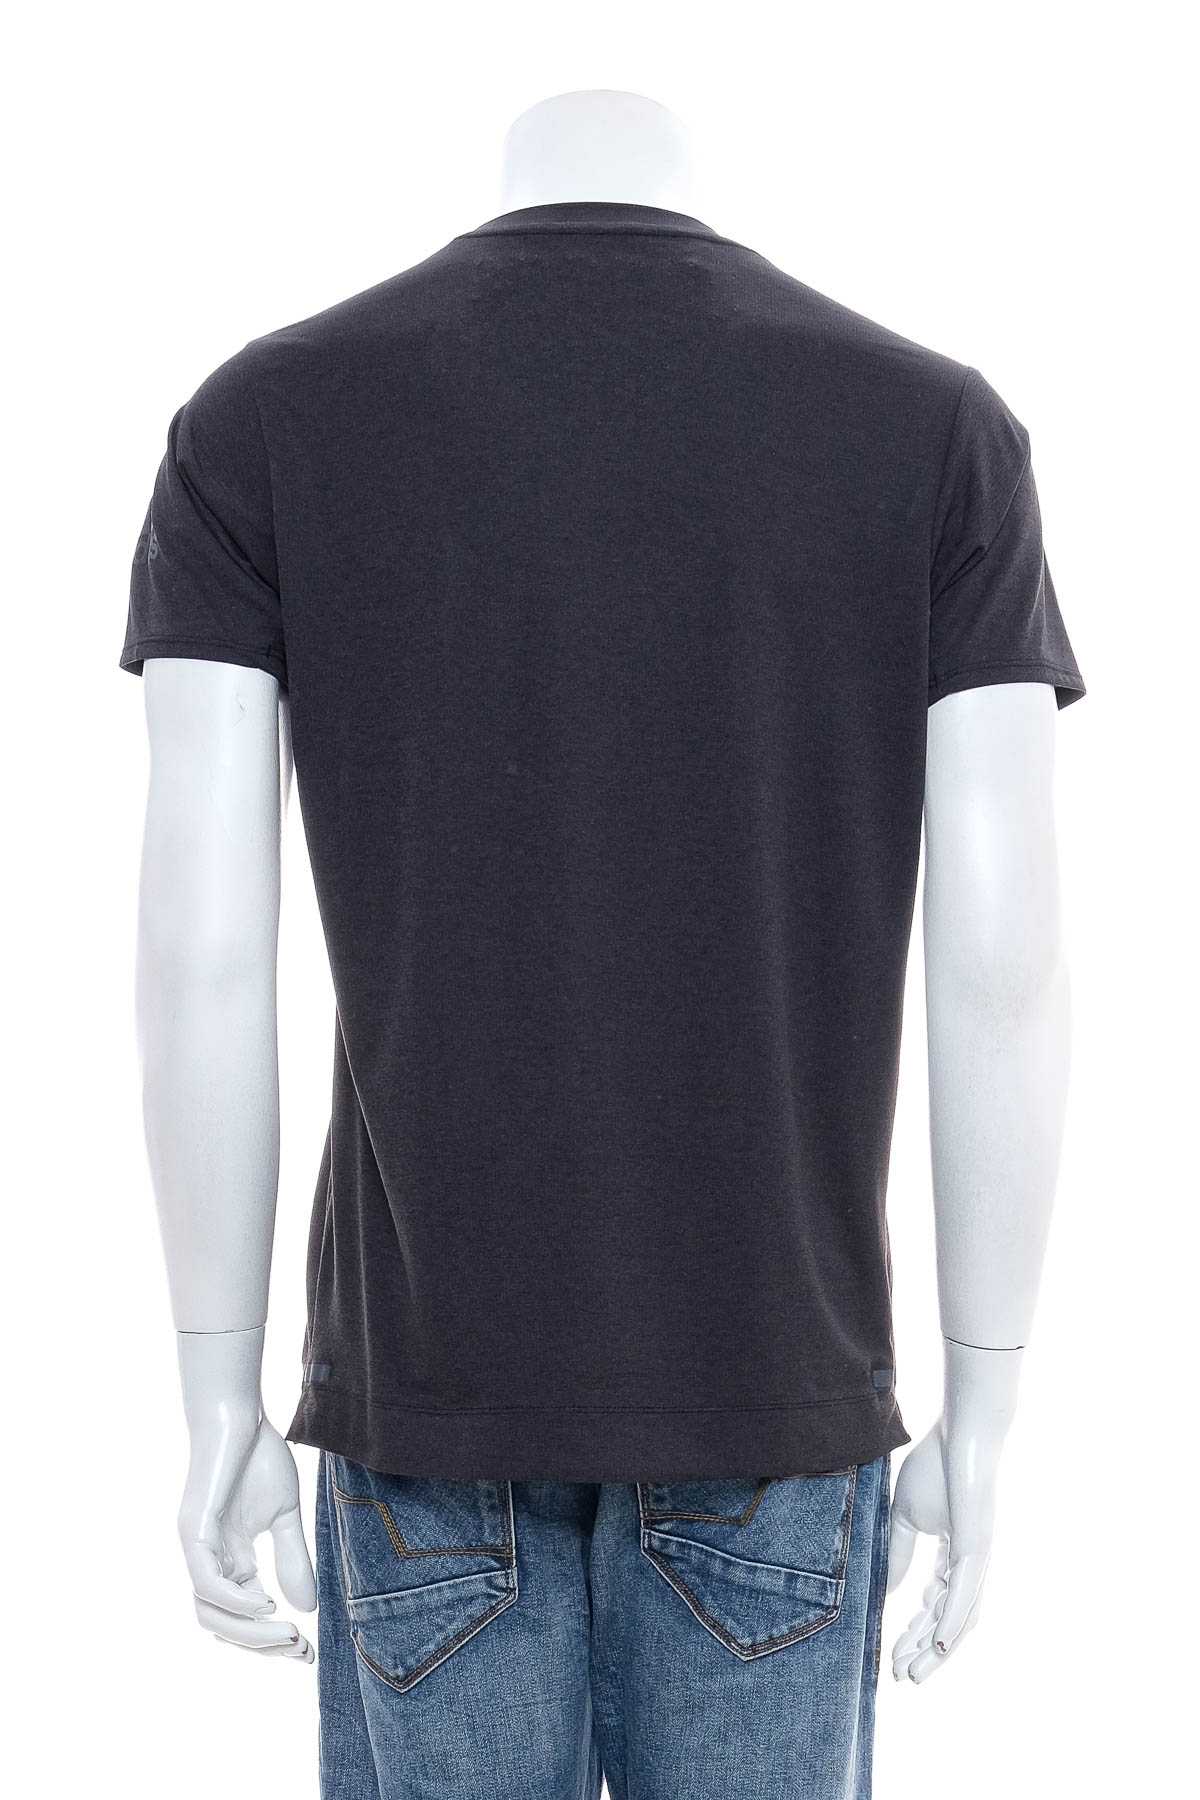 Men's T-shirt - Adidas climachill - 1